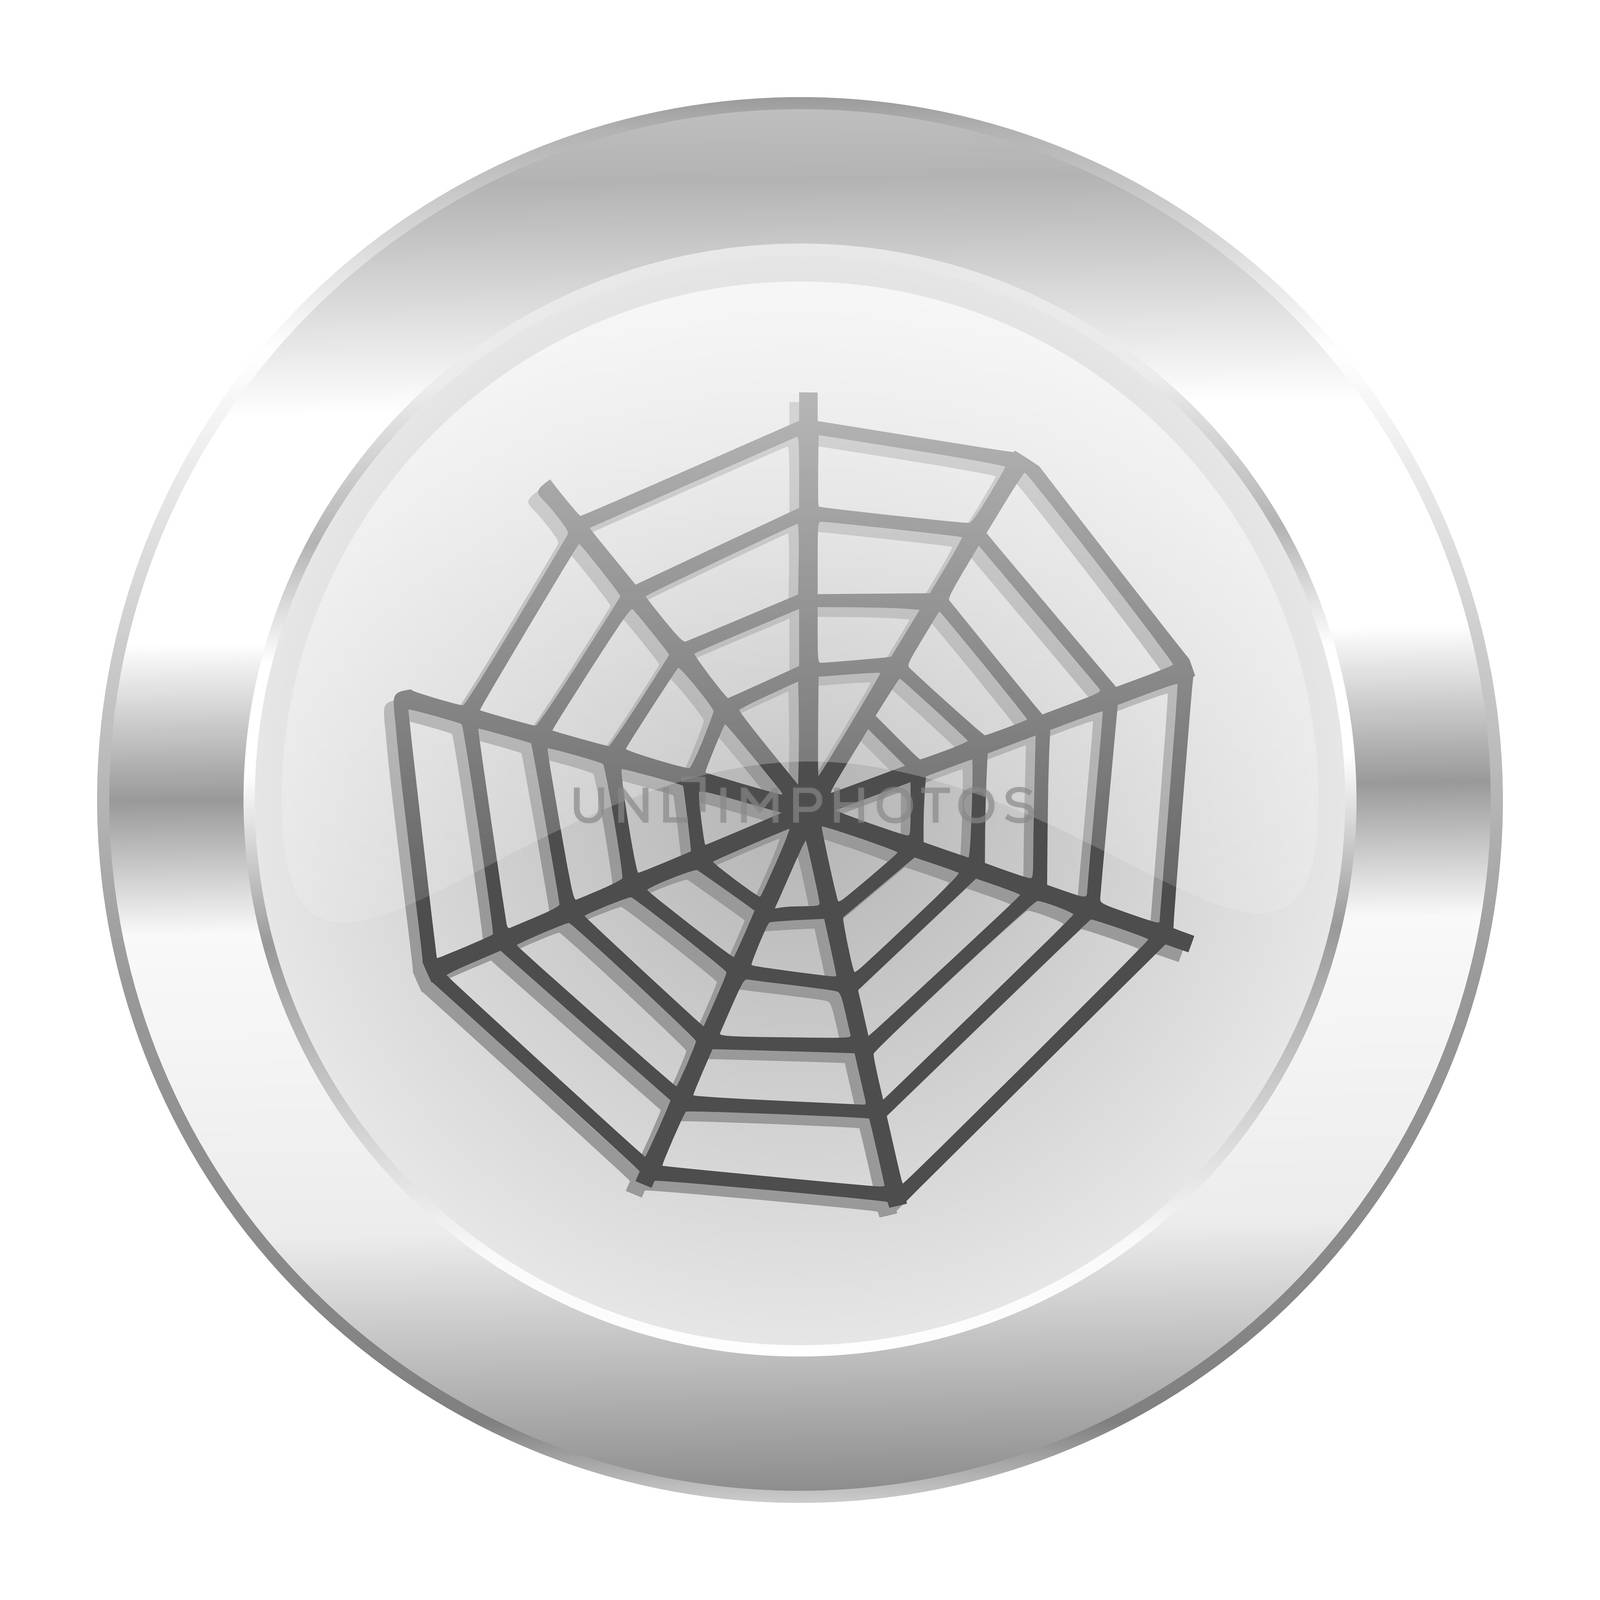 spider web chrome web icon isolated by alexwhite